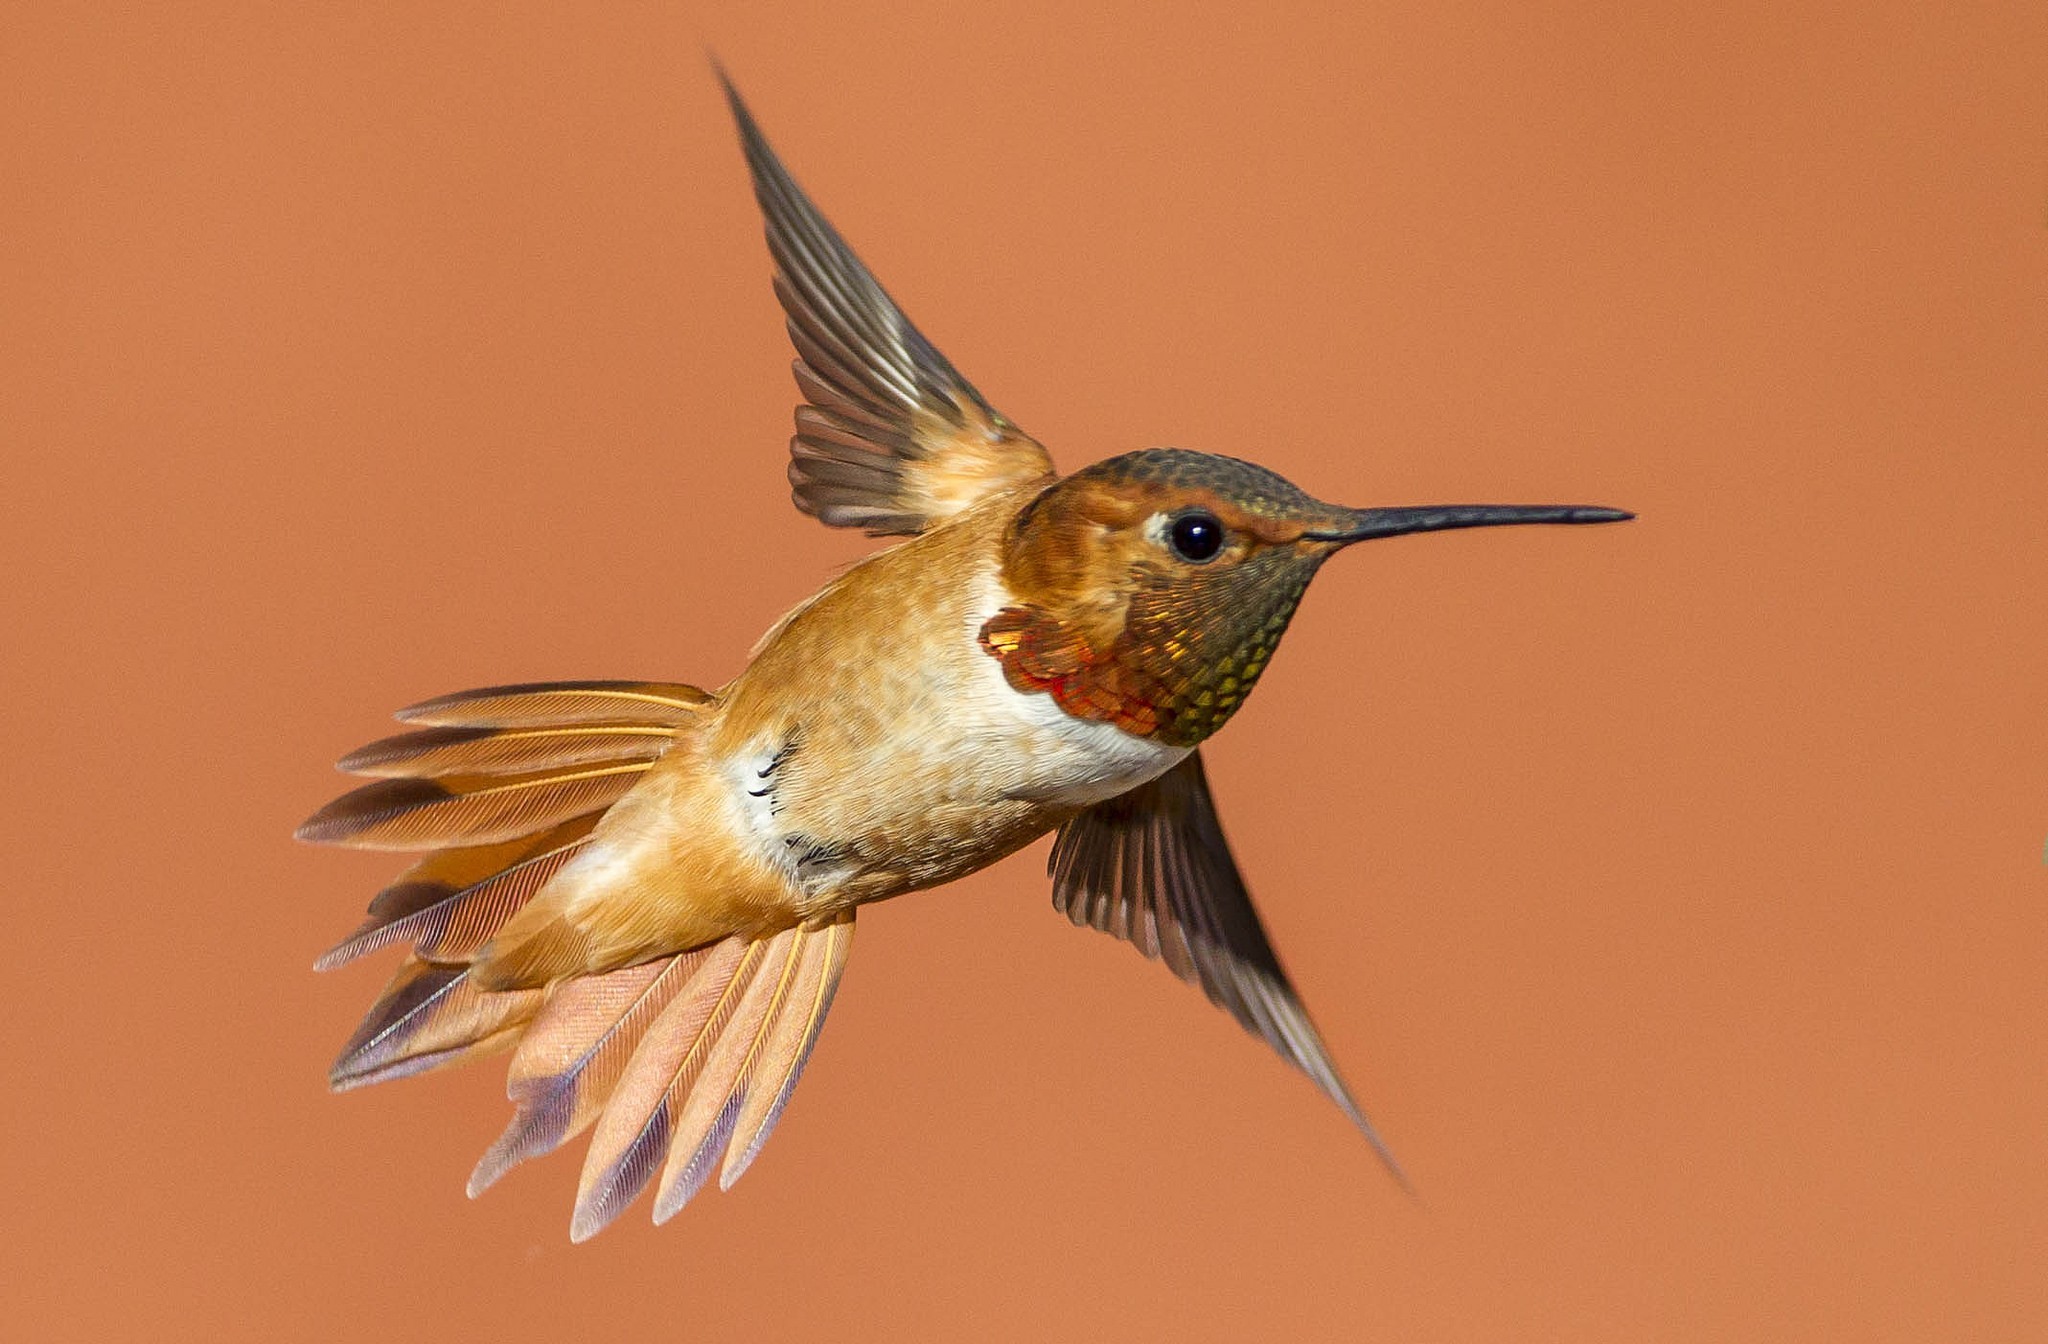 349062 descargar imagen animales, colibrí, vuelo, aves: fondos de pantalla y protectores de pantalla gratis